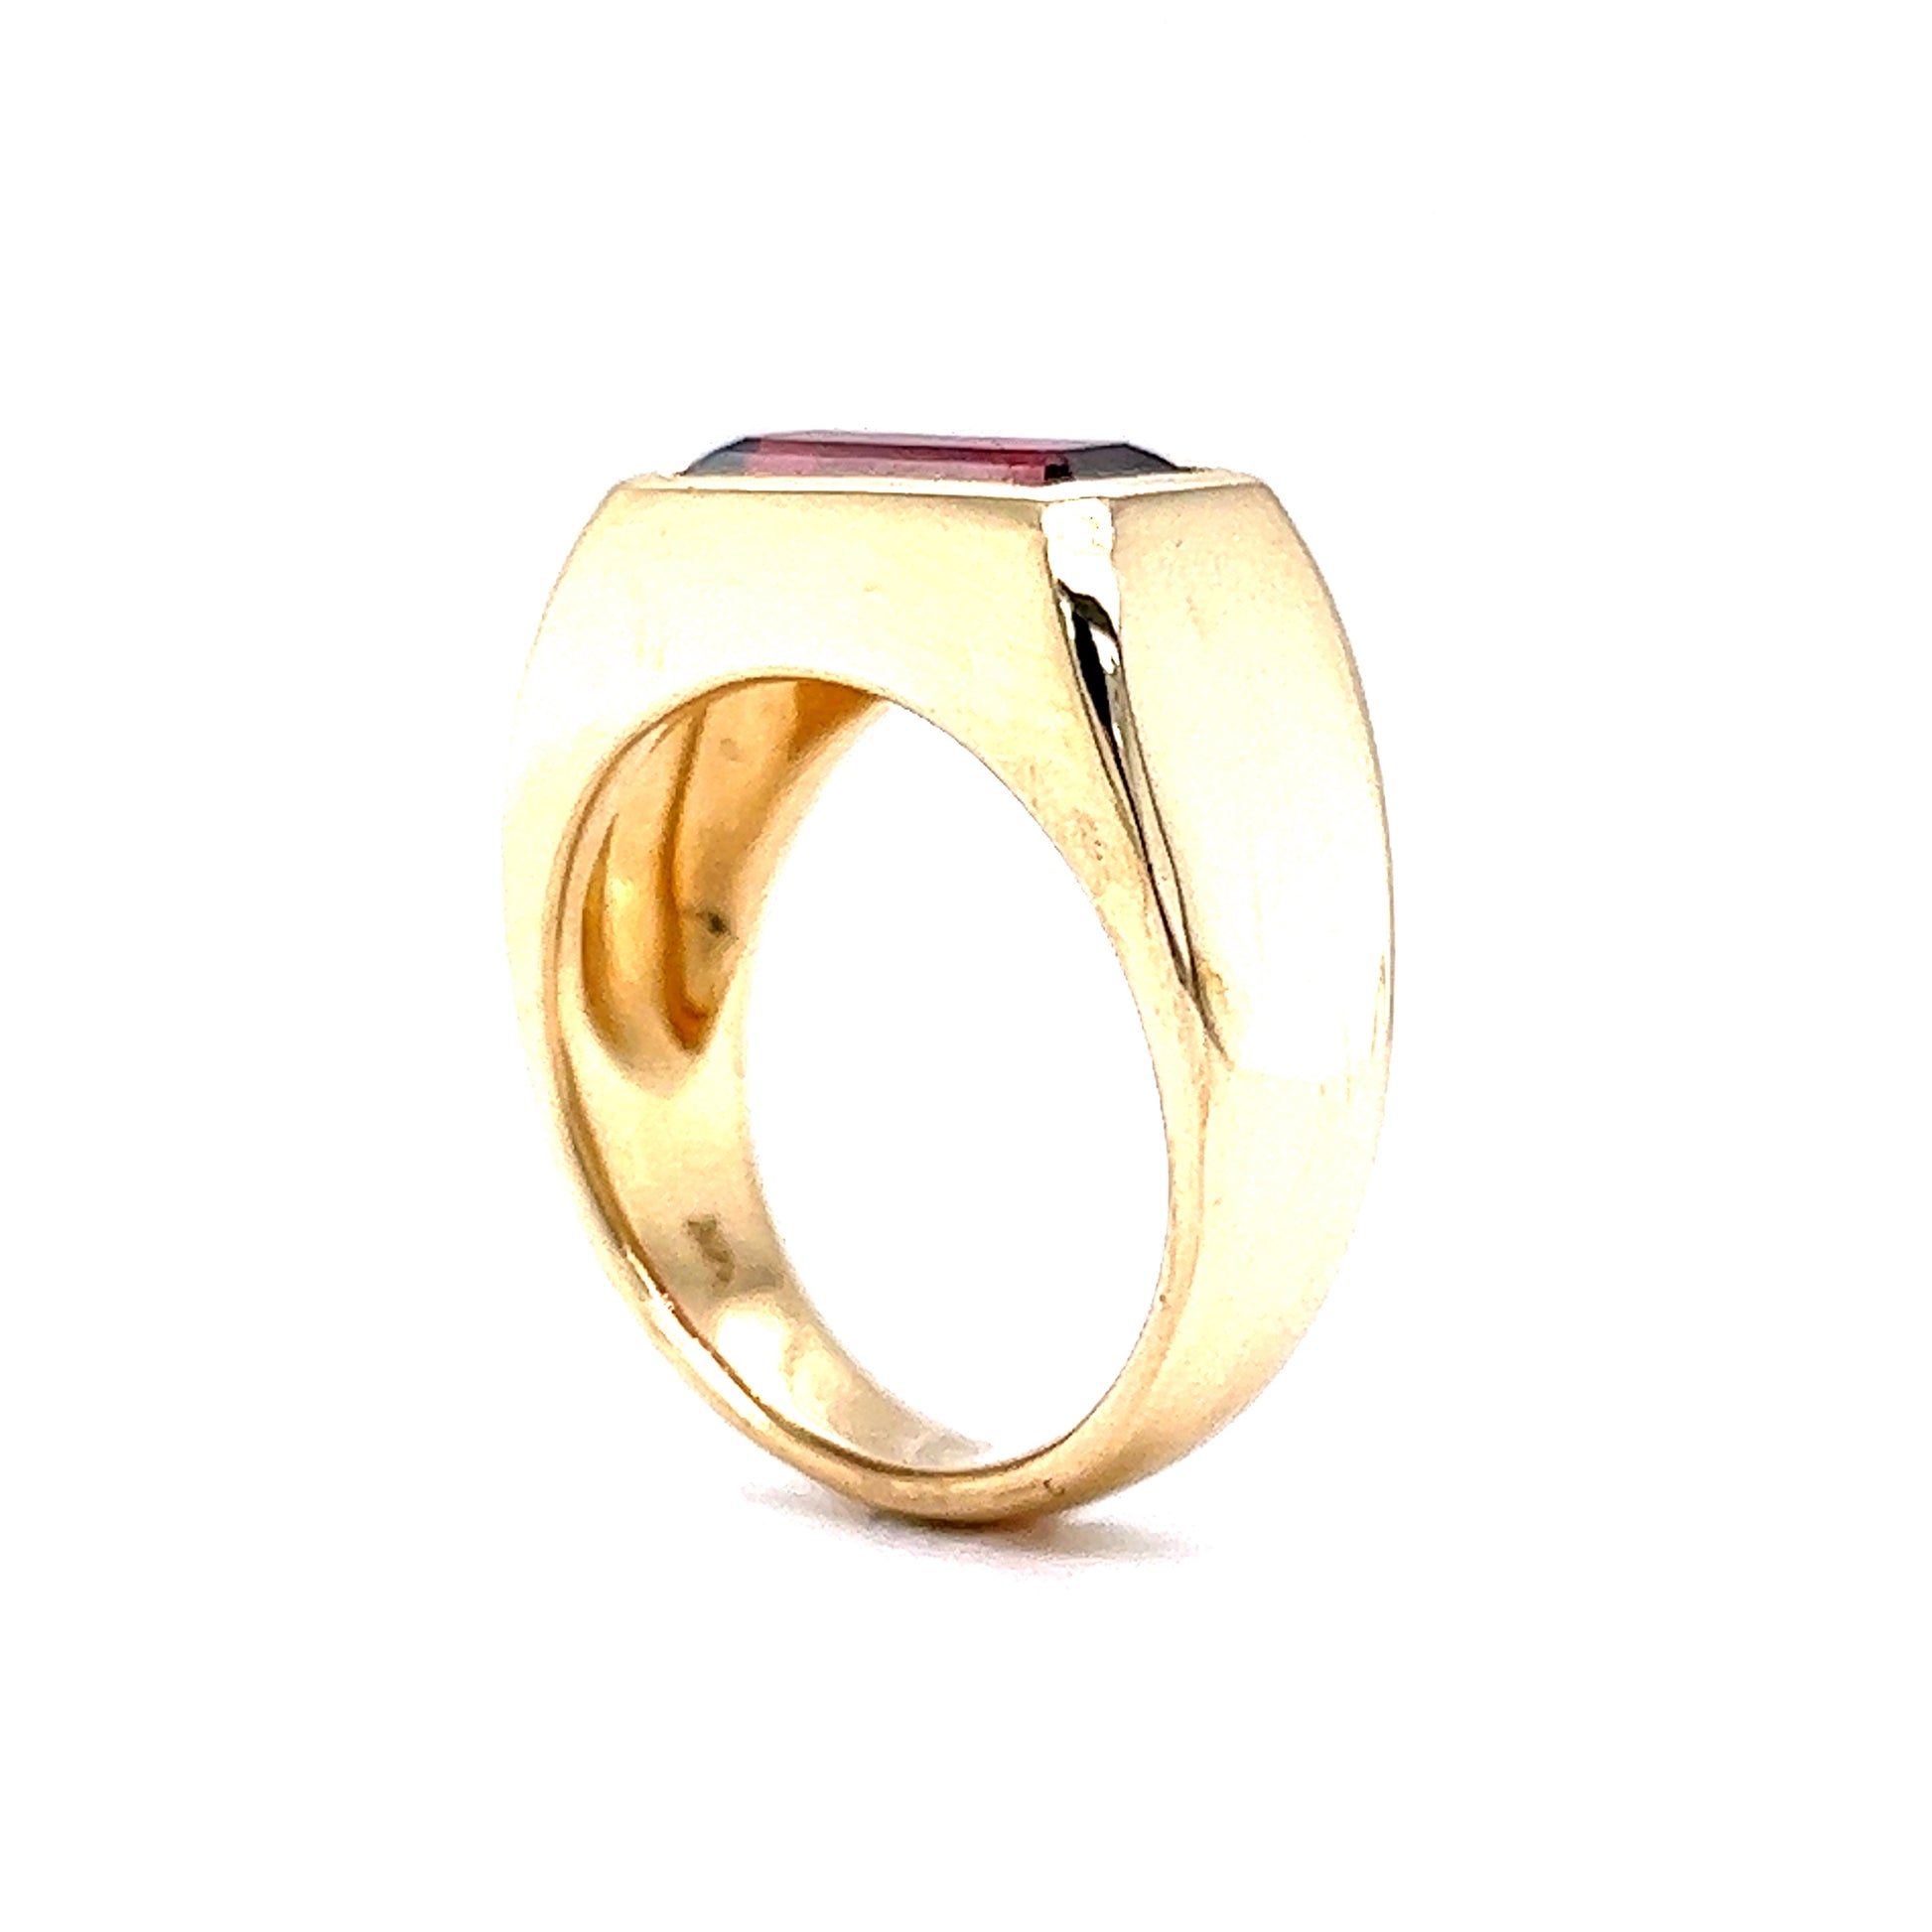 Bezel Set Garnet Cocktail Ring in 14k Yellow GoldComposition: 14 Karat Yellow Gold Ring Size: 6.5 Total Gram Weight: 9.5 g Inscription: 14k
      